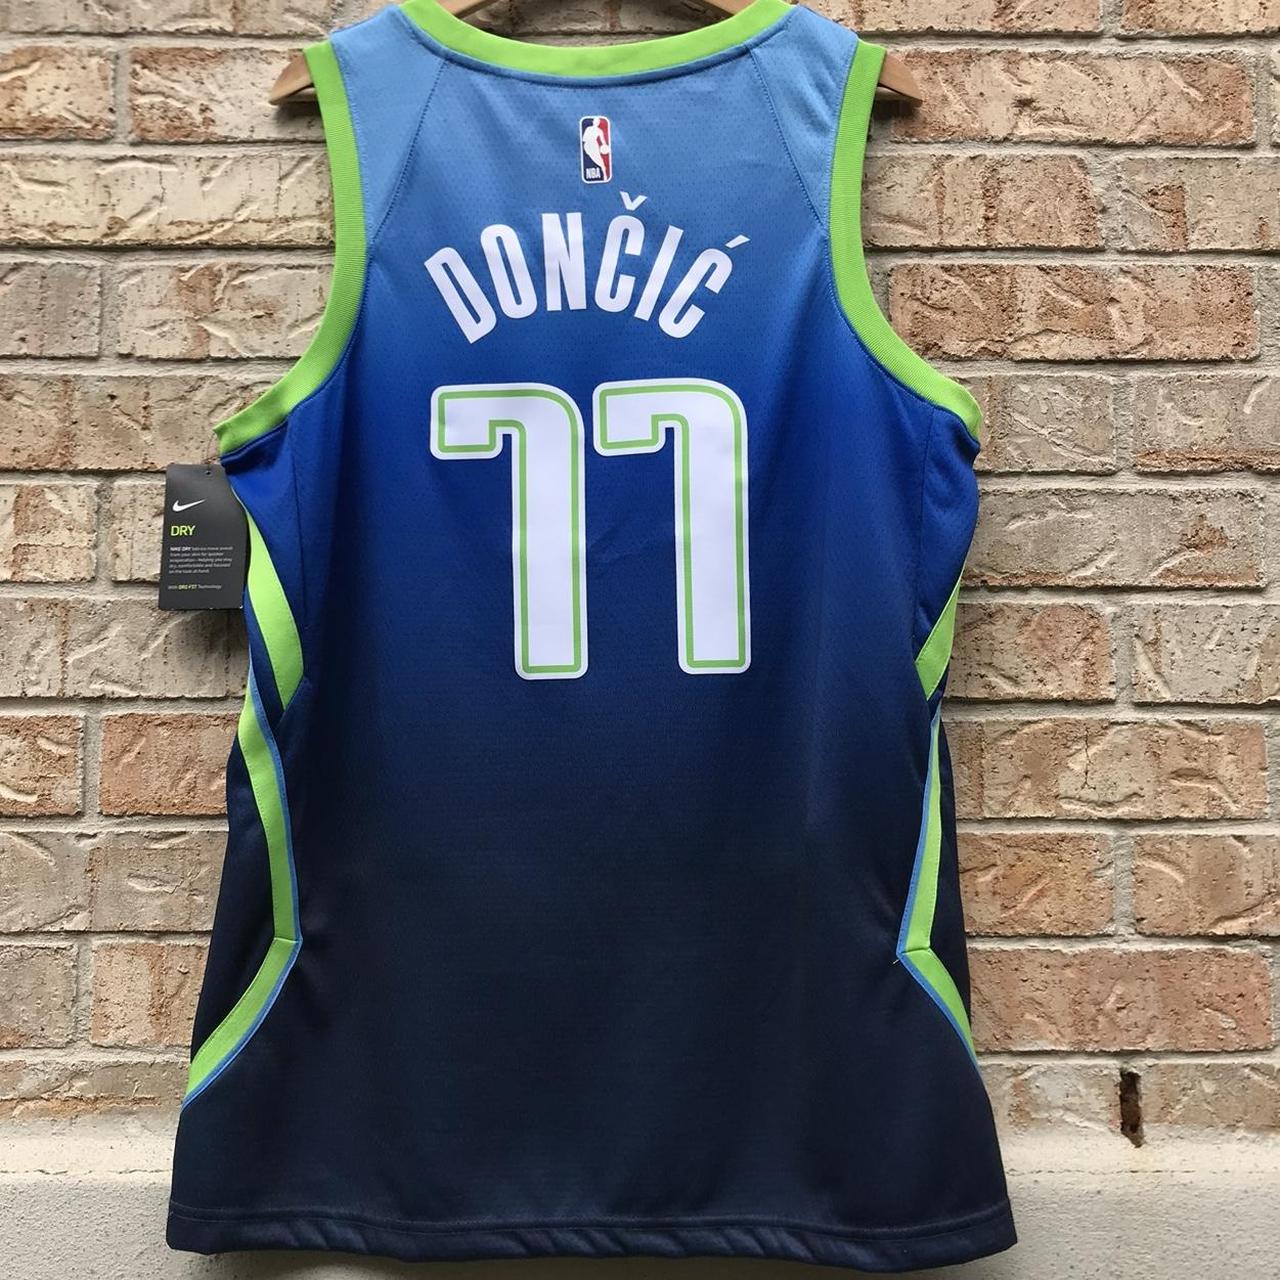 Retro Dallas Mavericks NBA jersey Dirk Nowitzki - Depop